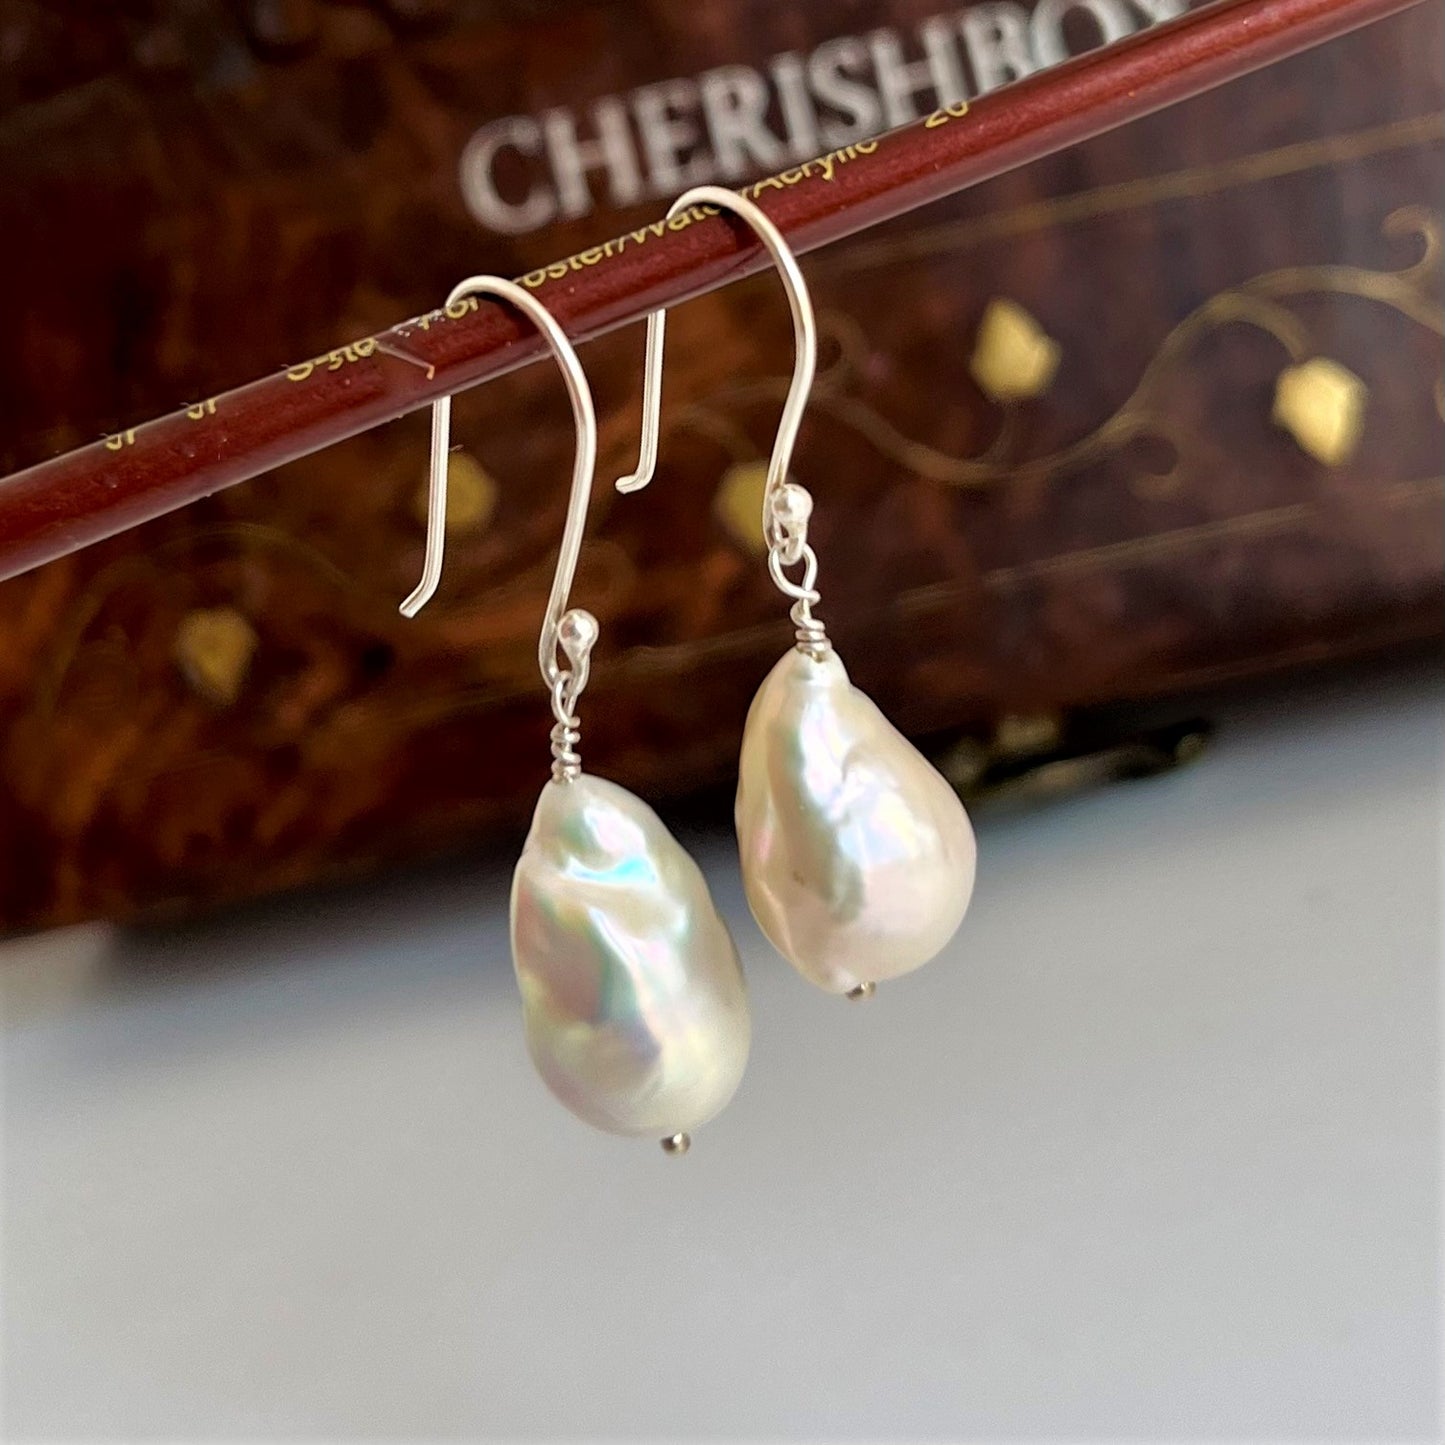 White Baroque Pearl Earrings - CherishBox